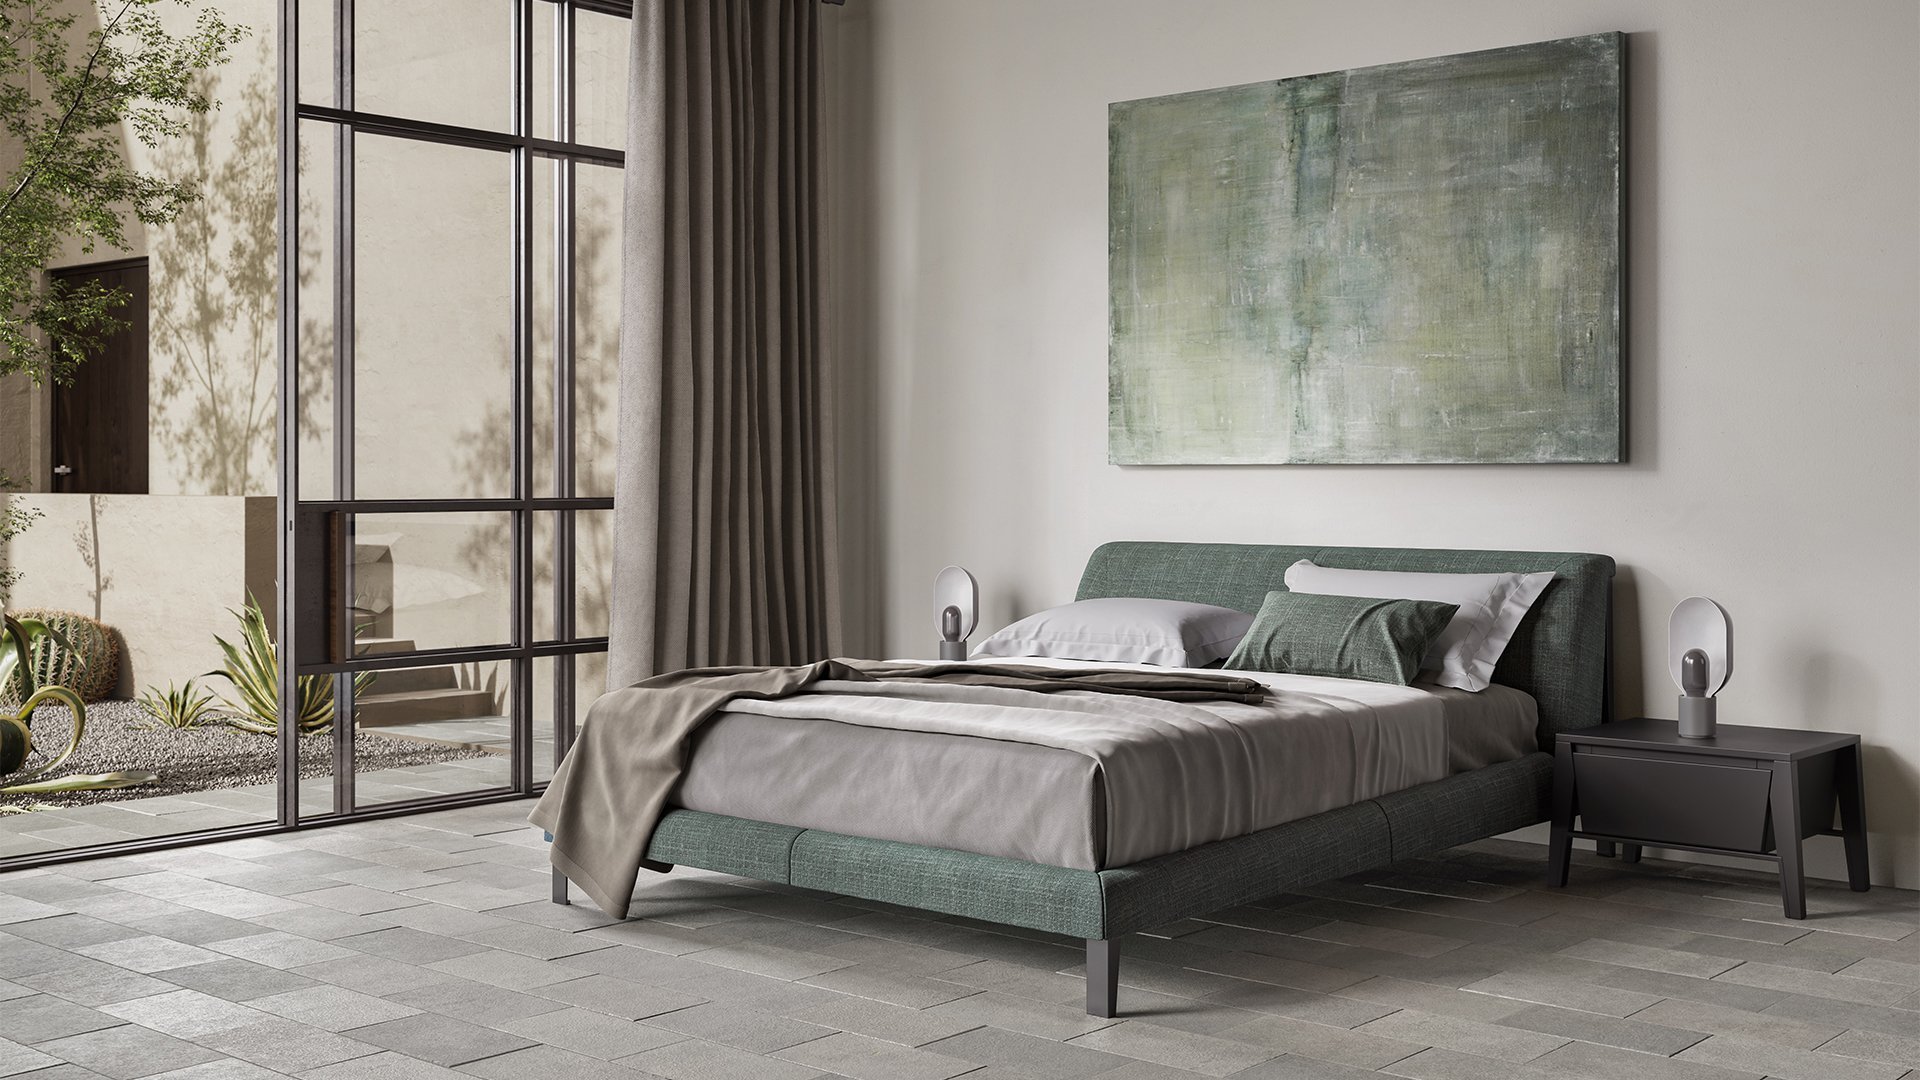 Natuzzi Italia beds bedroom furniture italian cyprus Takis Angelides Furnihome beds with storage